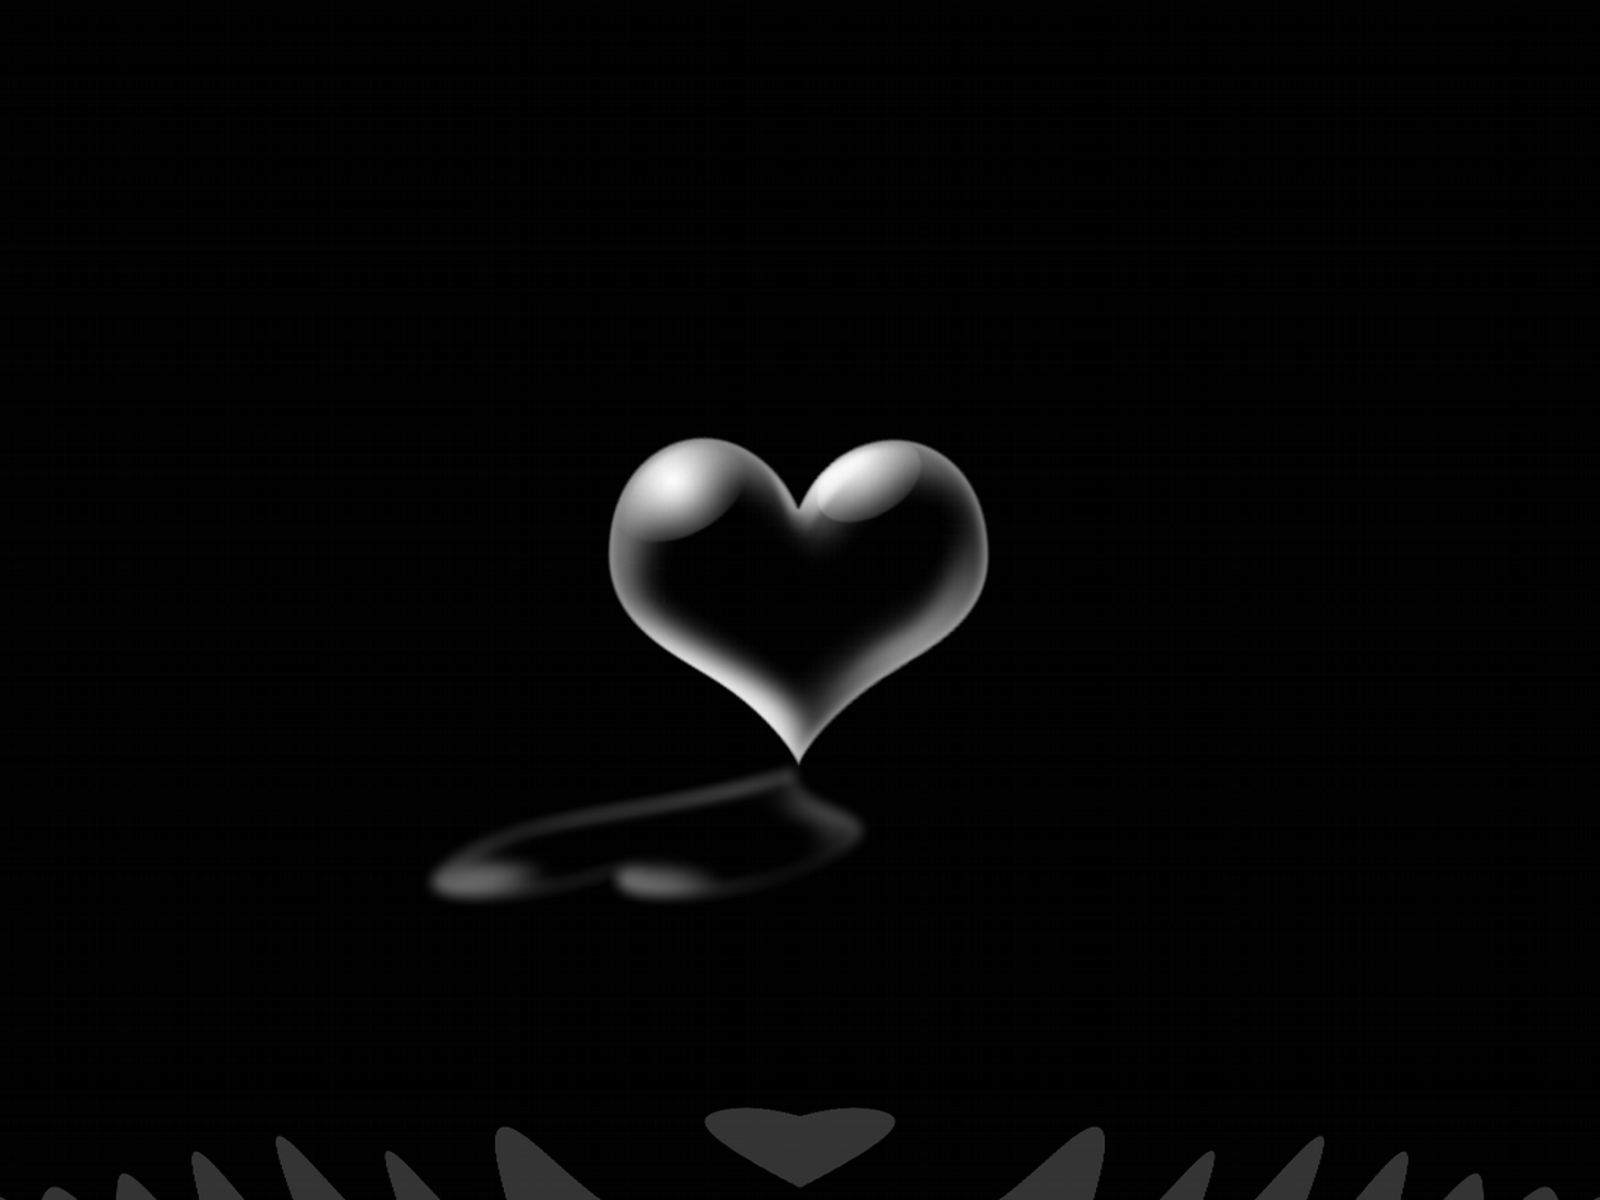 Black Heart. Heart wallpaper, Black wallpaper, Black heart